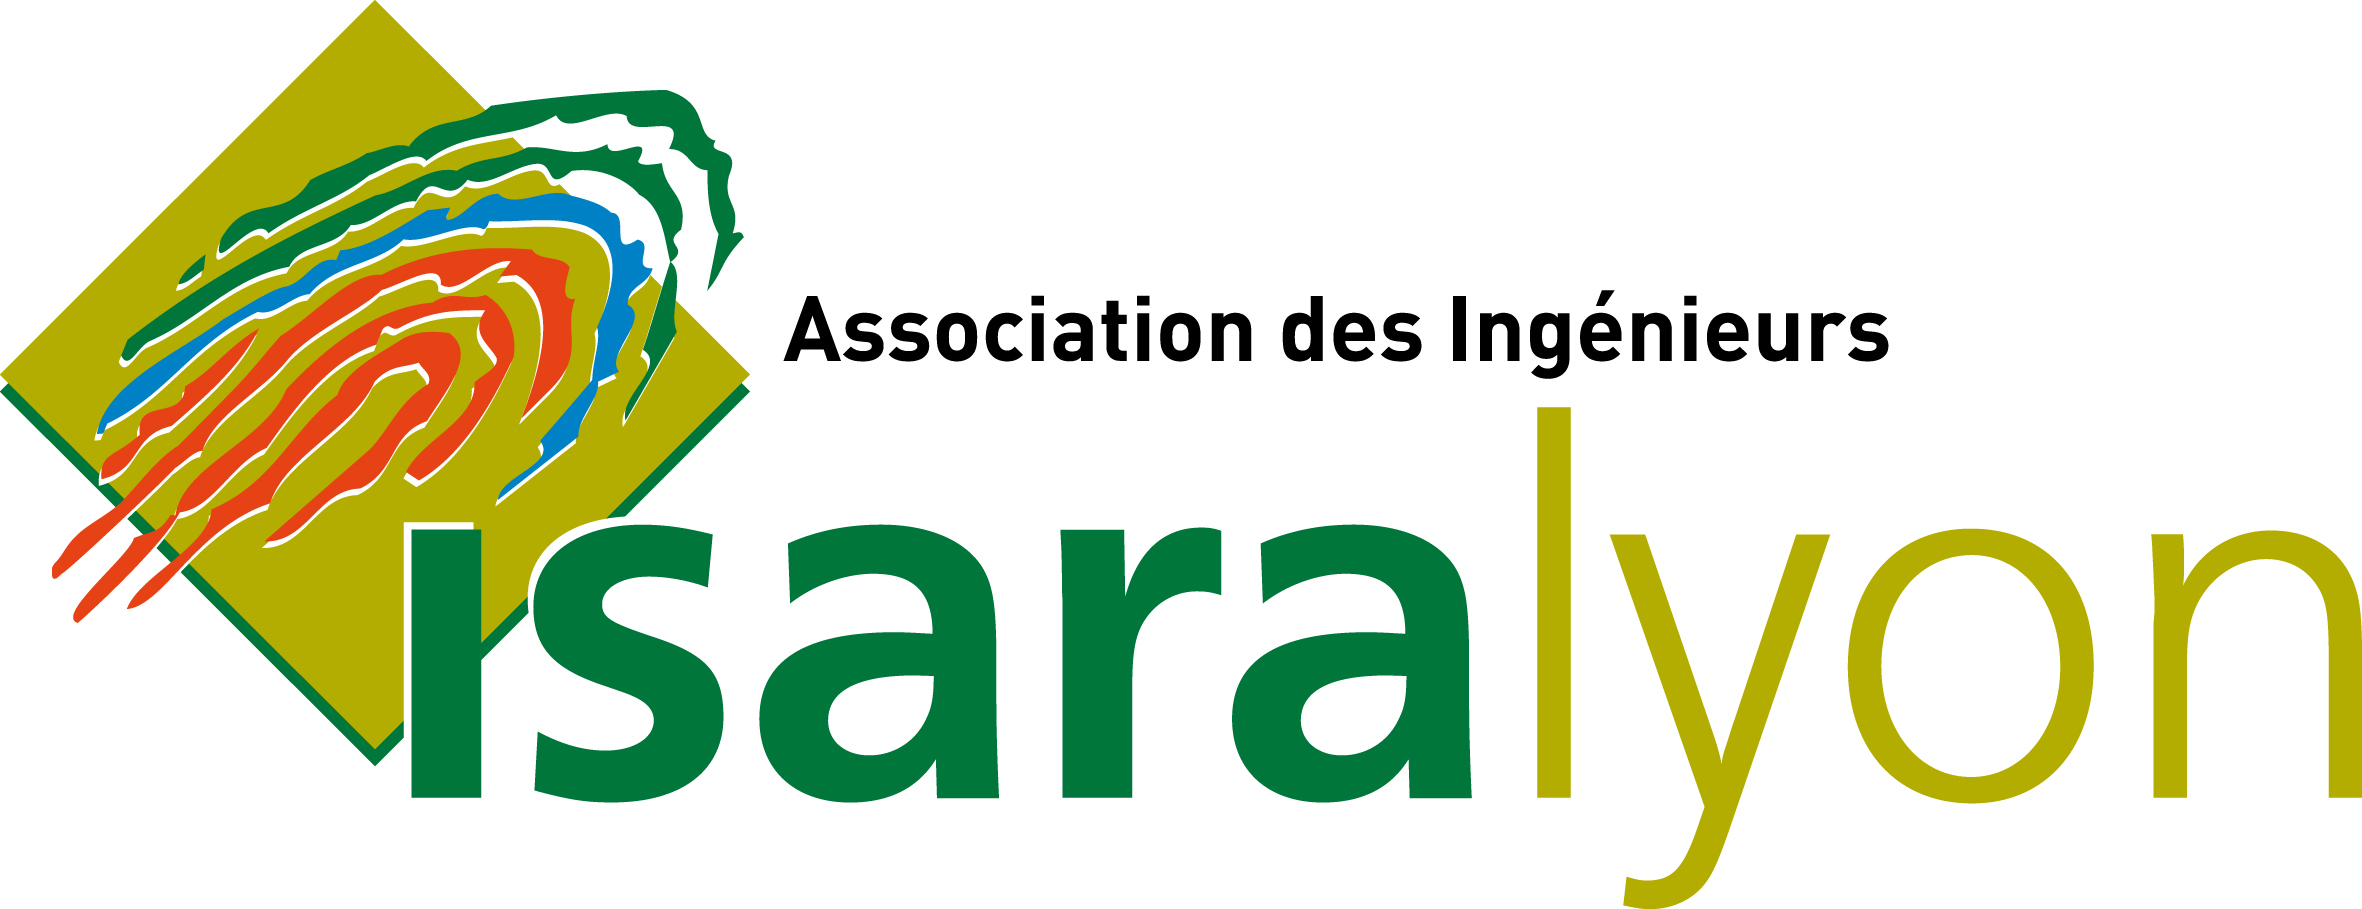 Logo ISARA lyon 